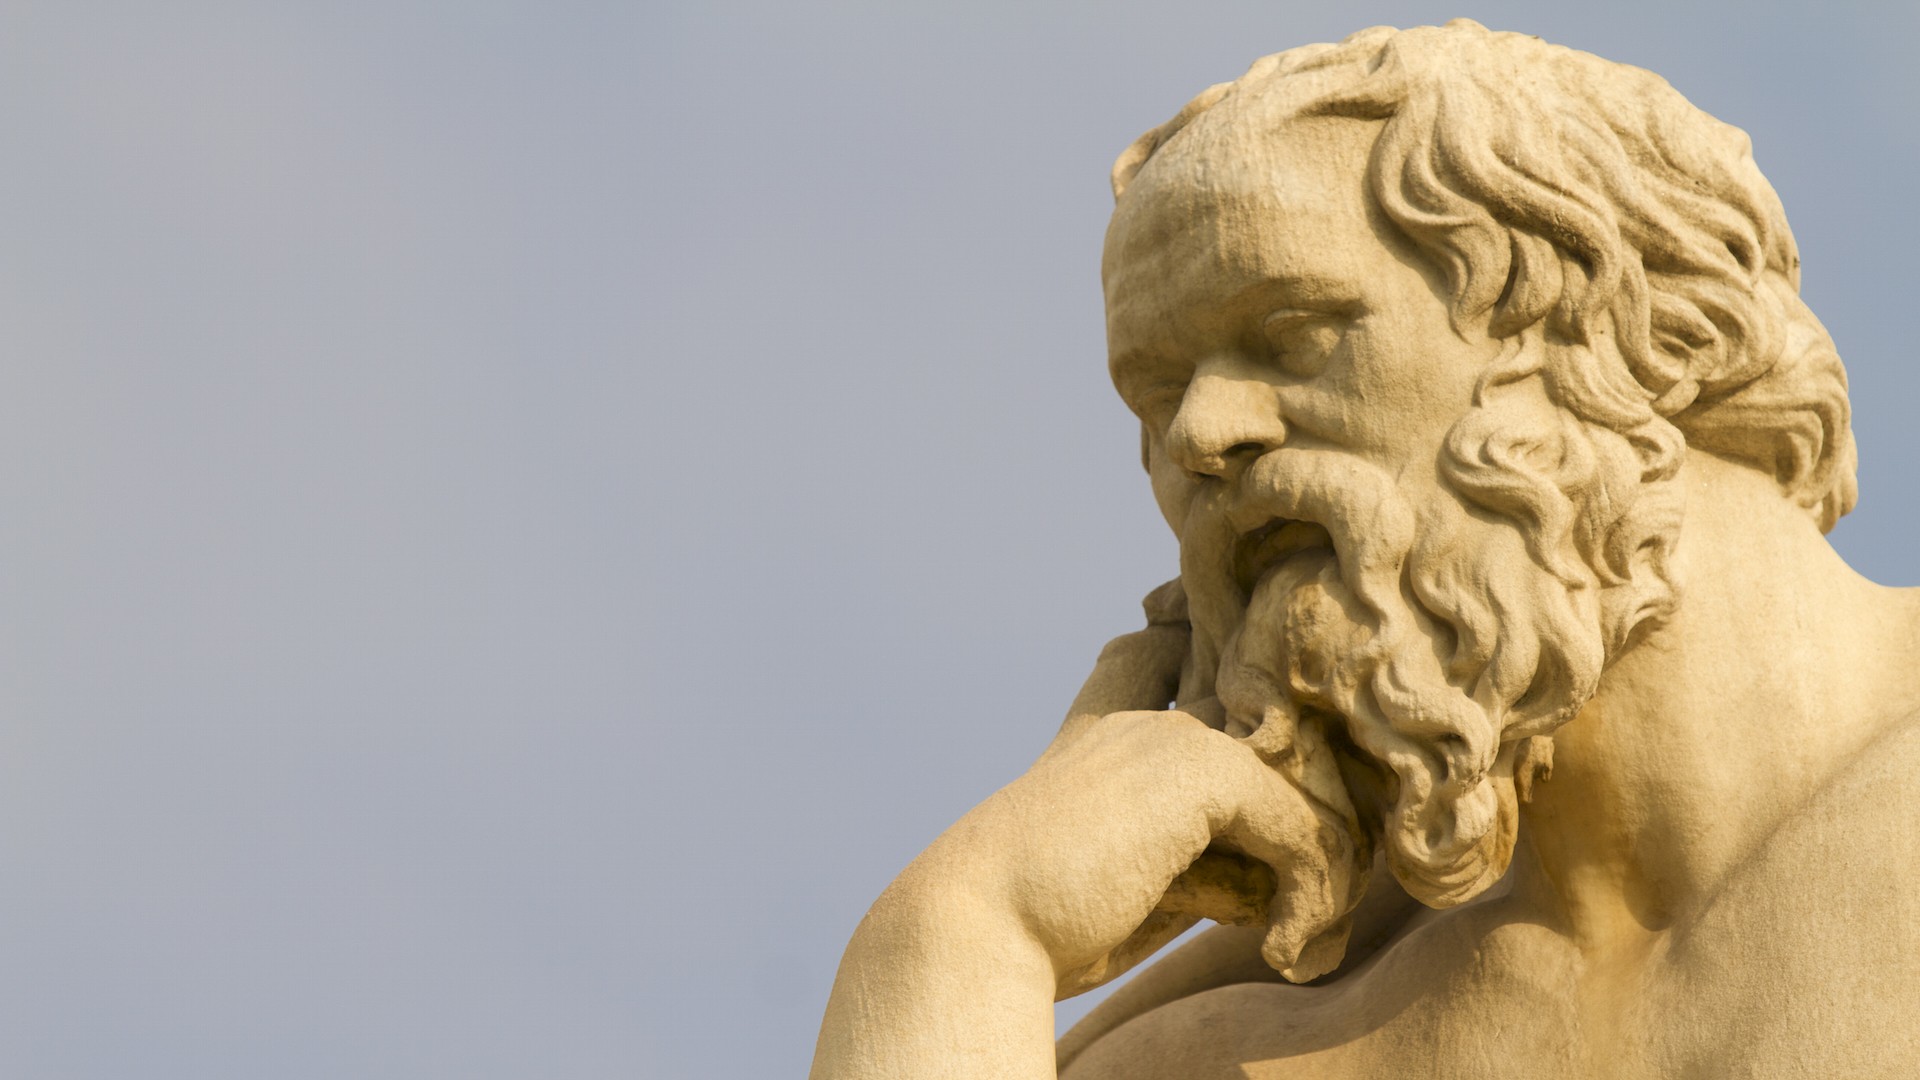 A portrait of Socrates? World Magazine